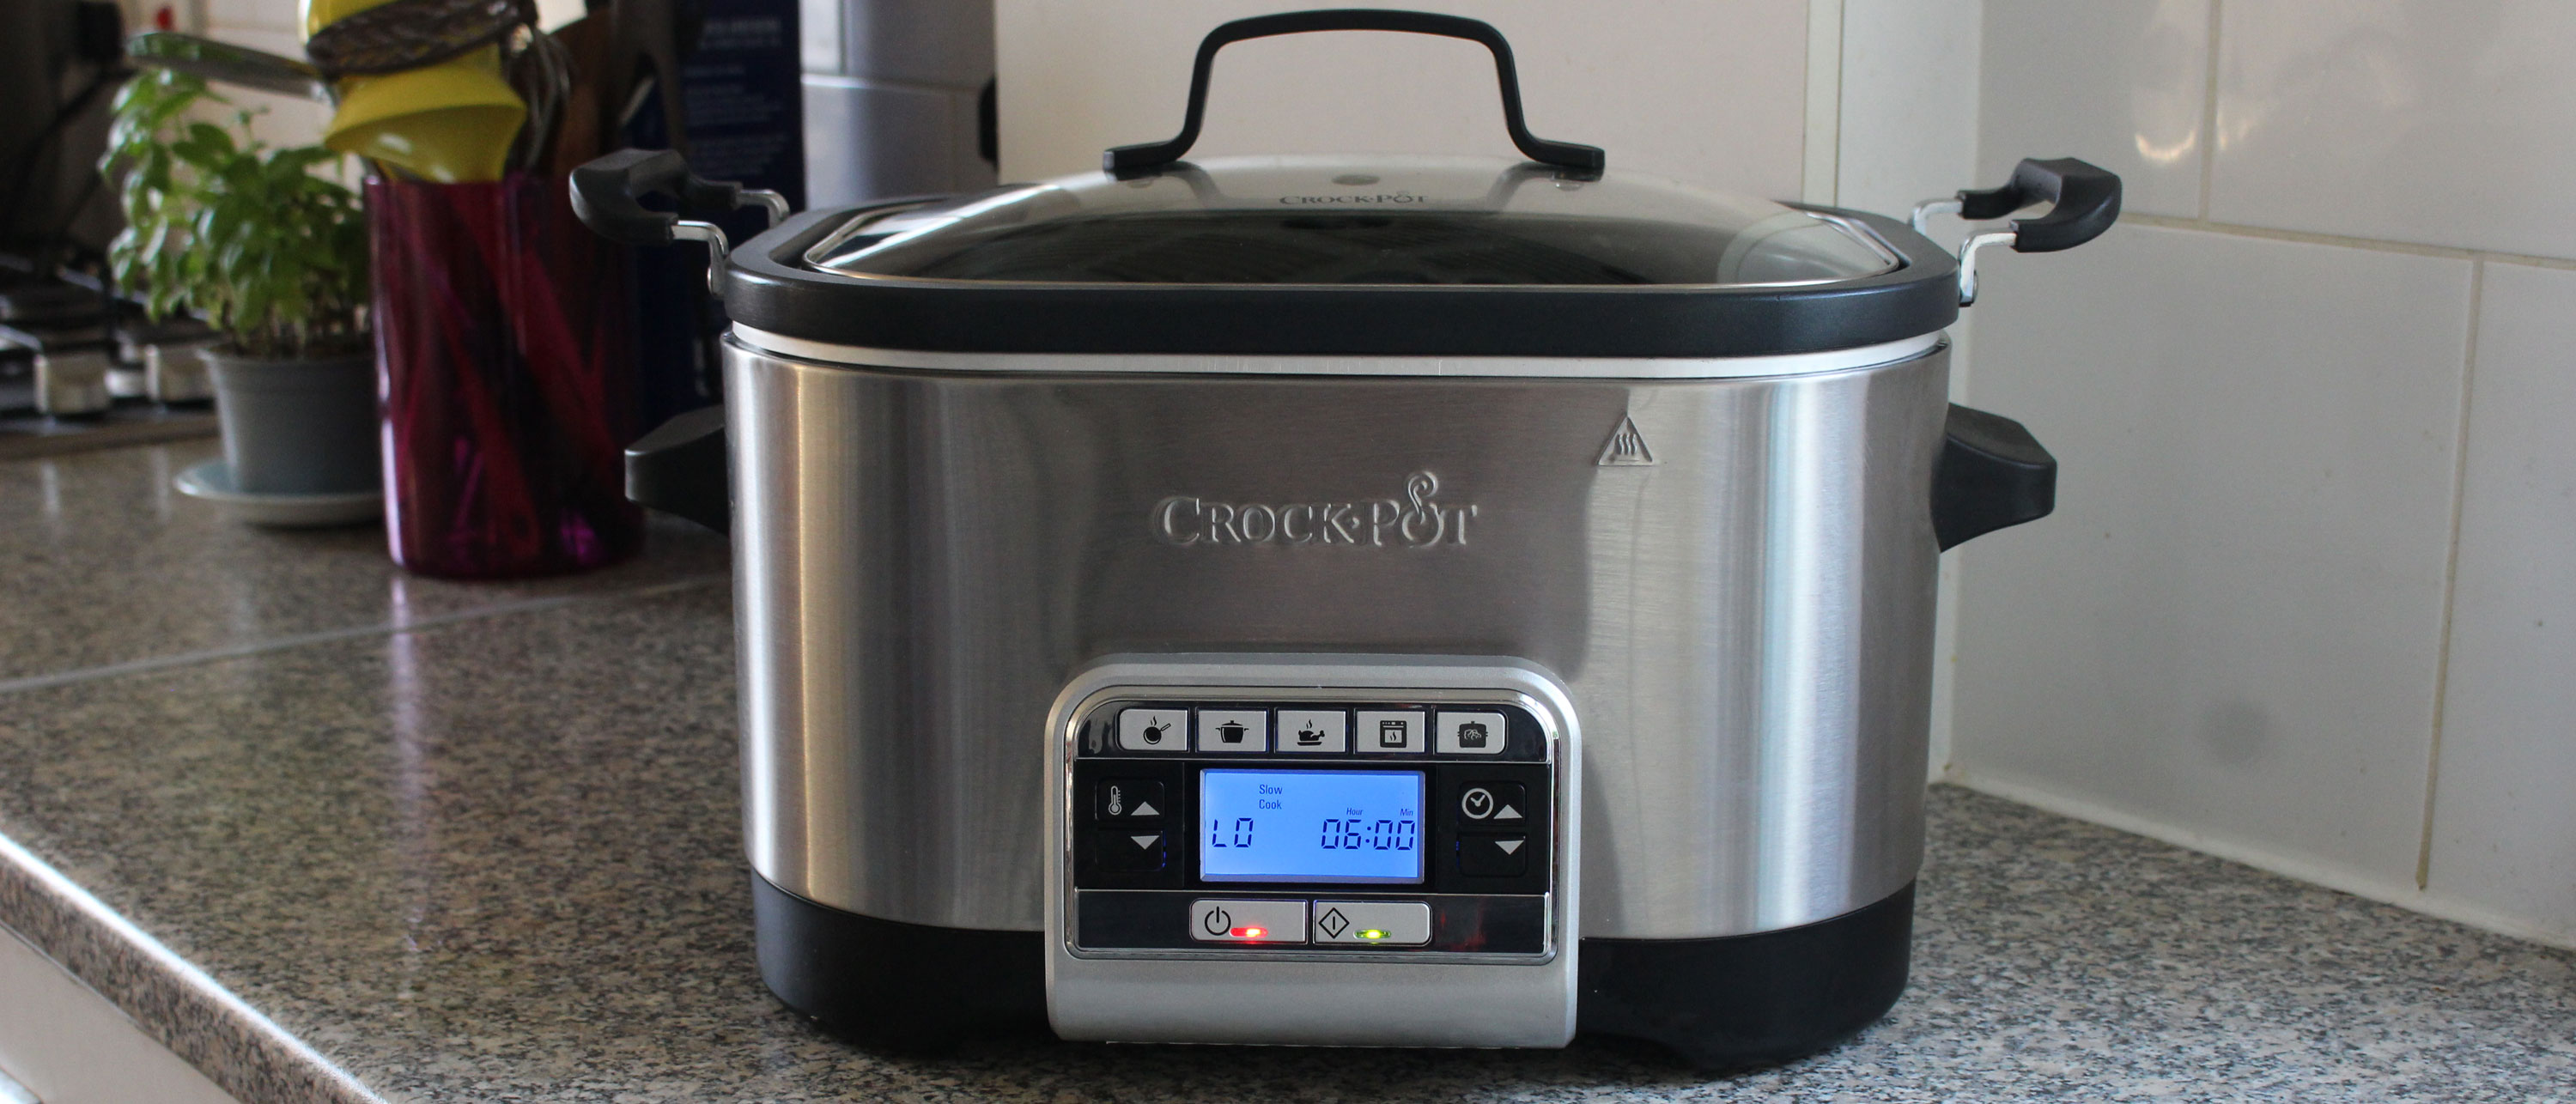 Crock-pot Digital Slow Cooker & Reviews